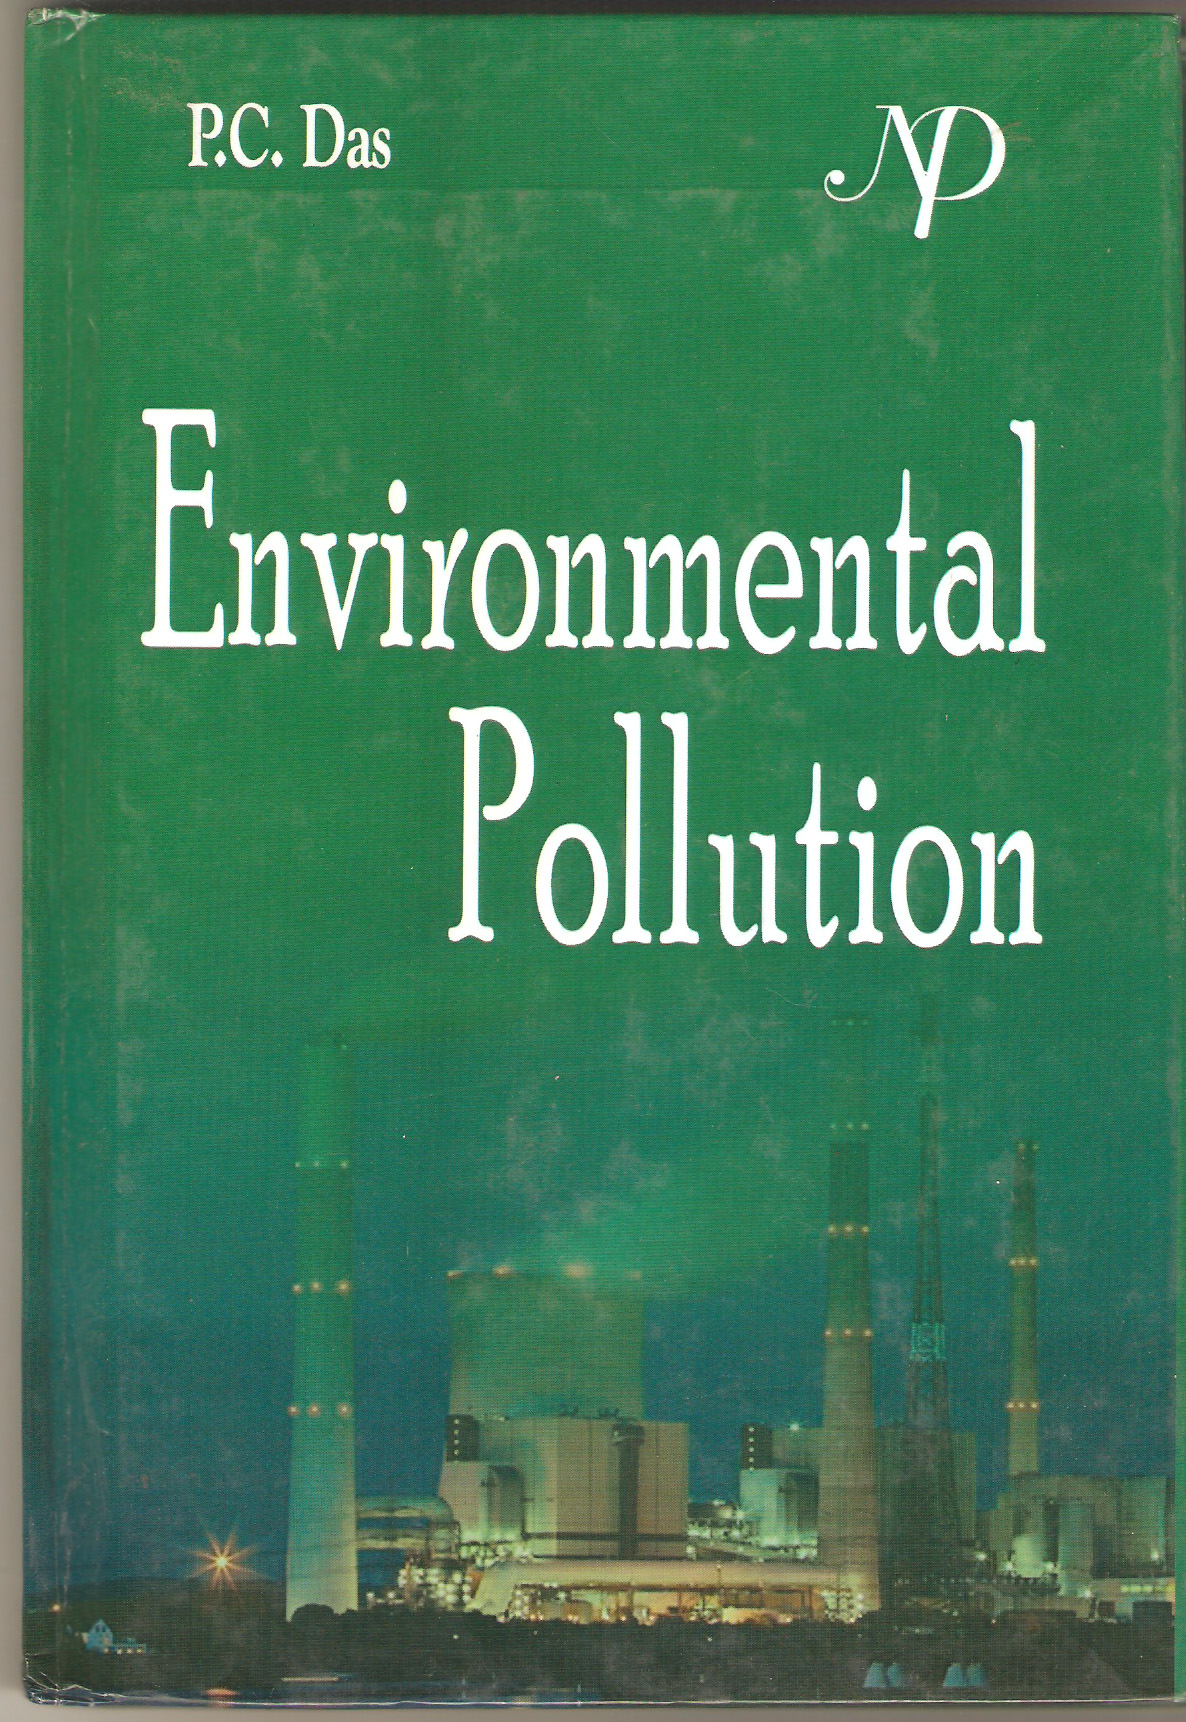 Environmental Pollution.jpg